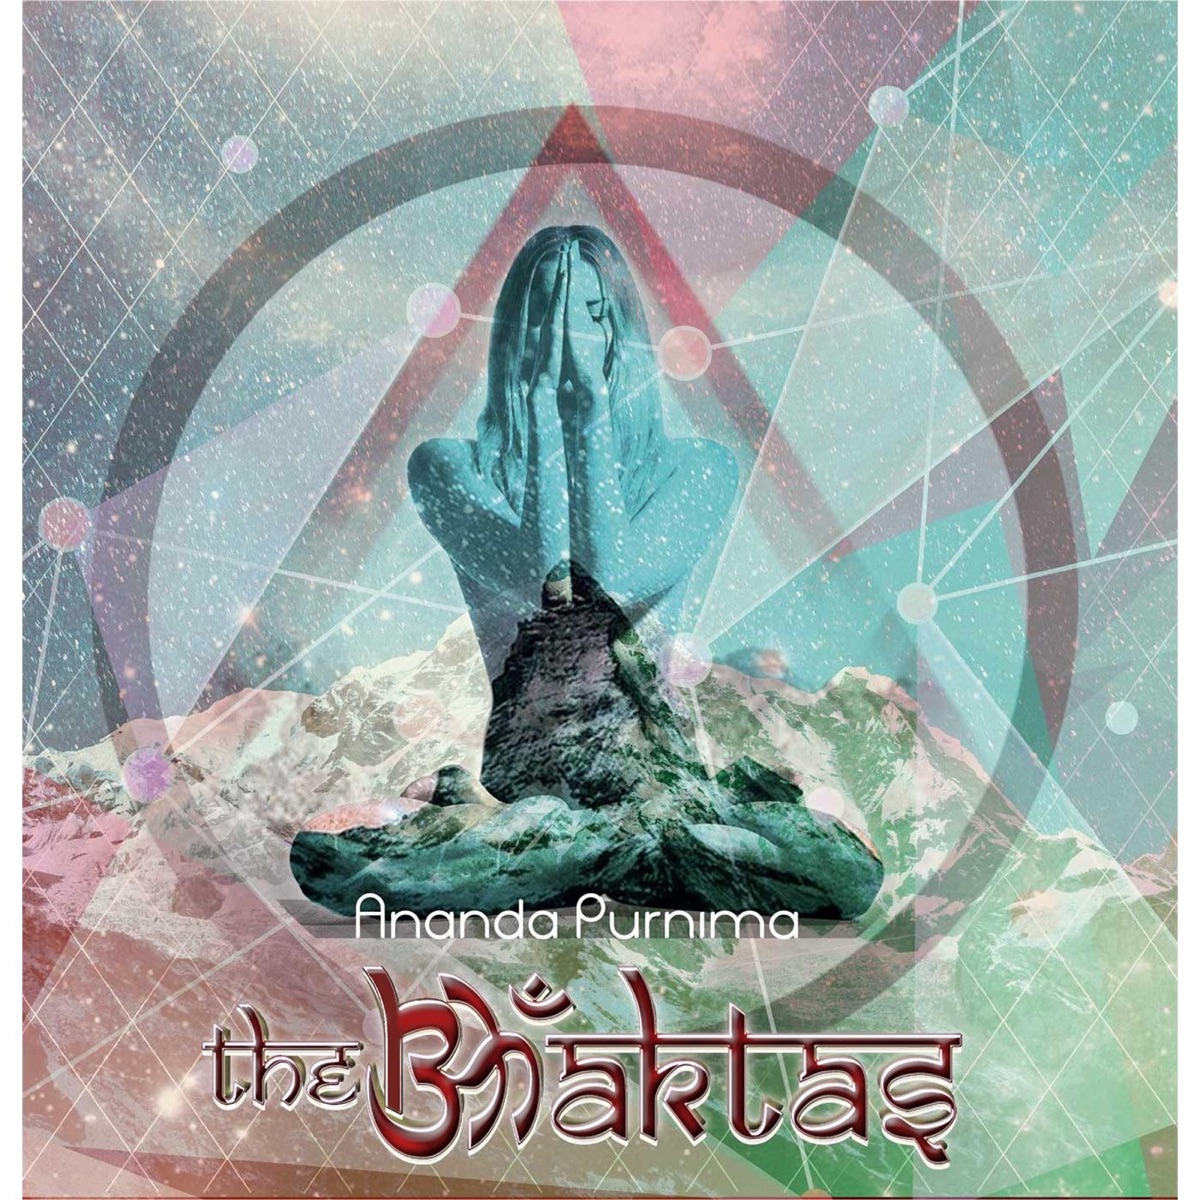 Cosmic Mantra (Reincarnated) by The Bhaktas on Apple Music